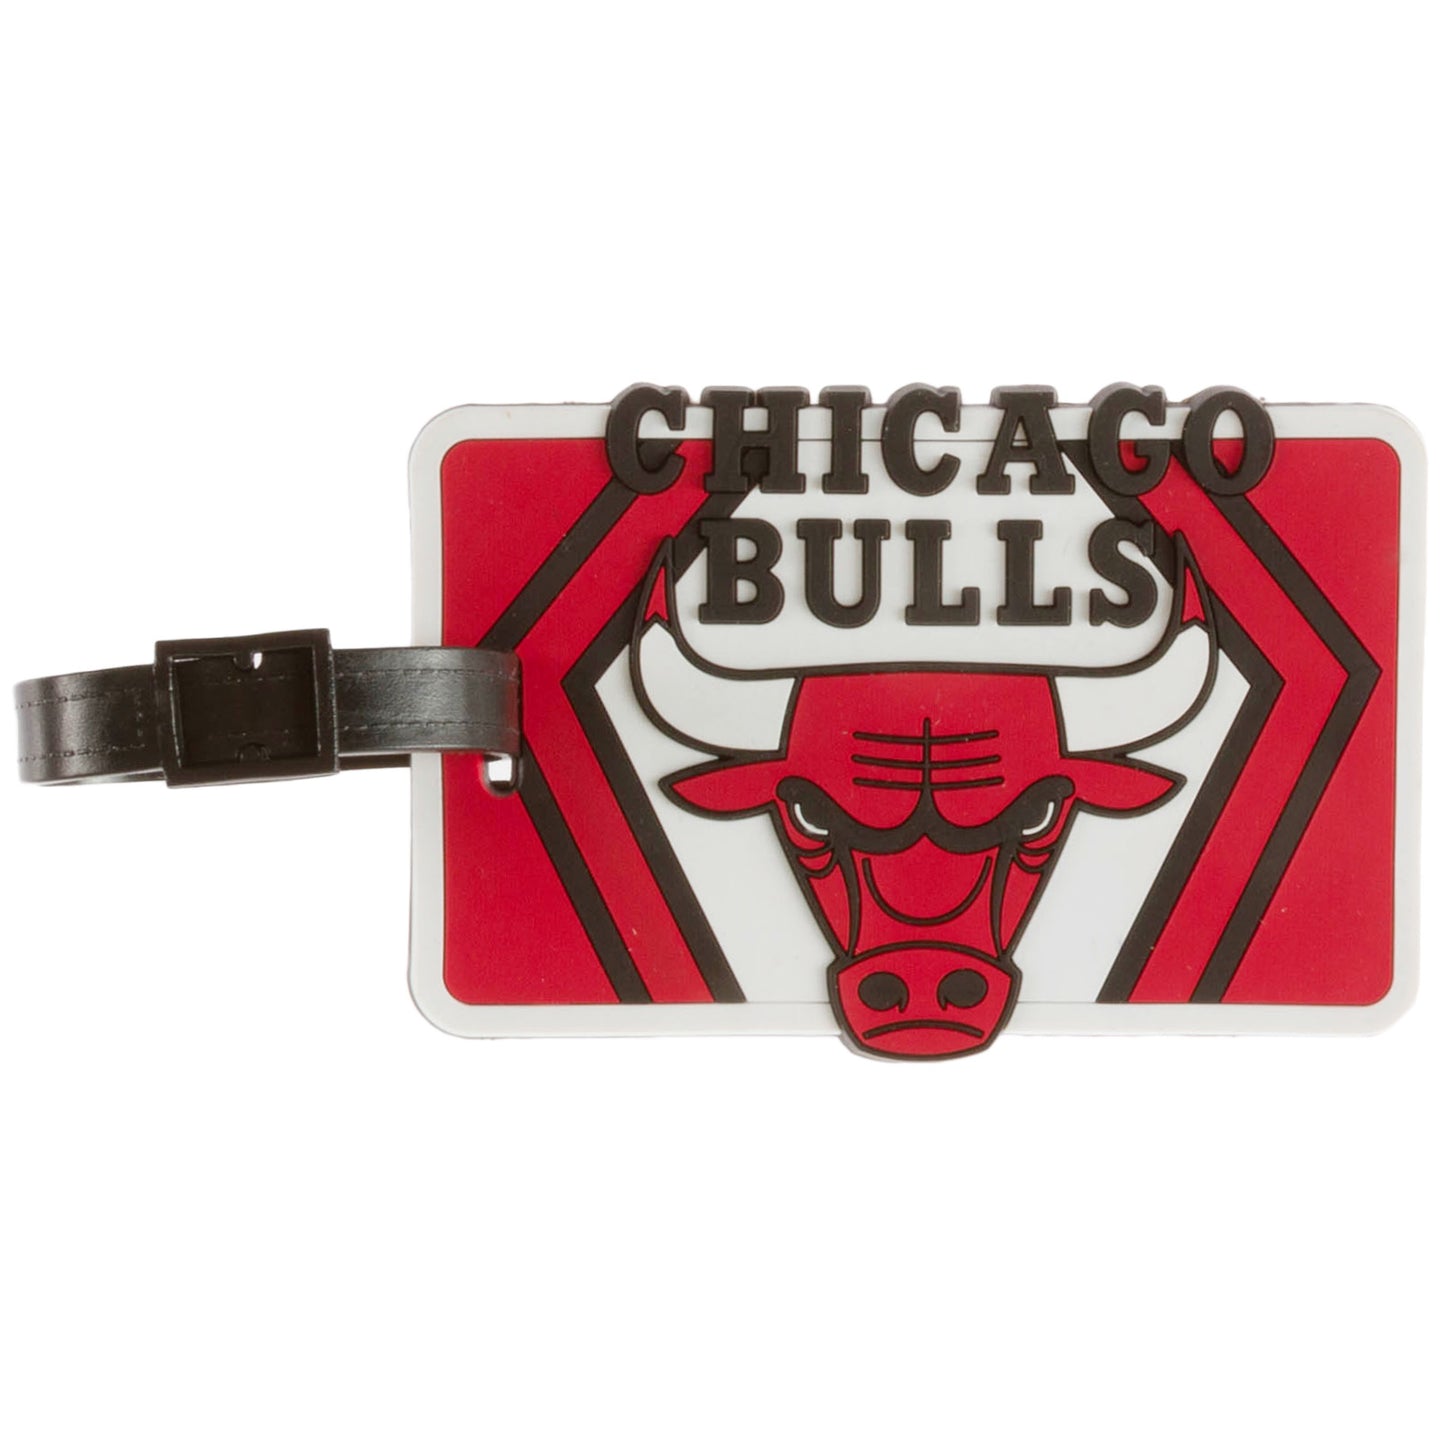 Chicago Bulls Luggage Bag Tag